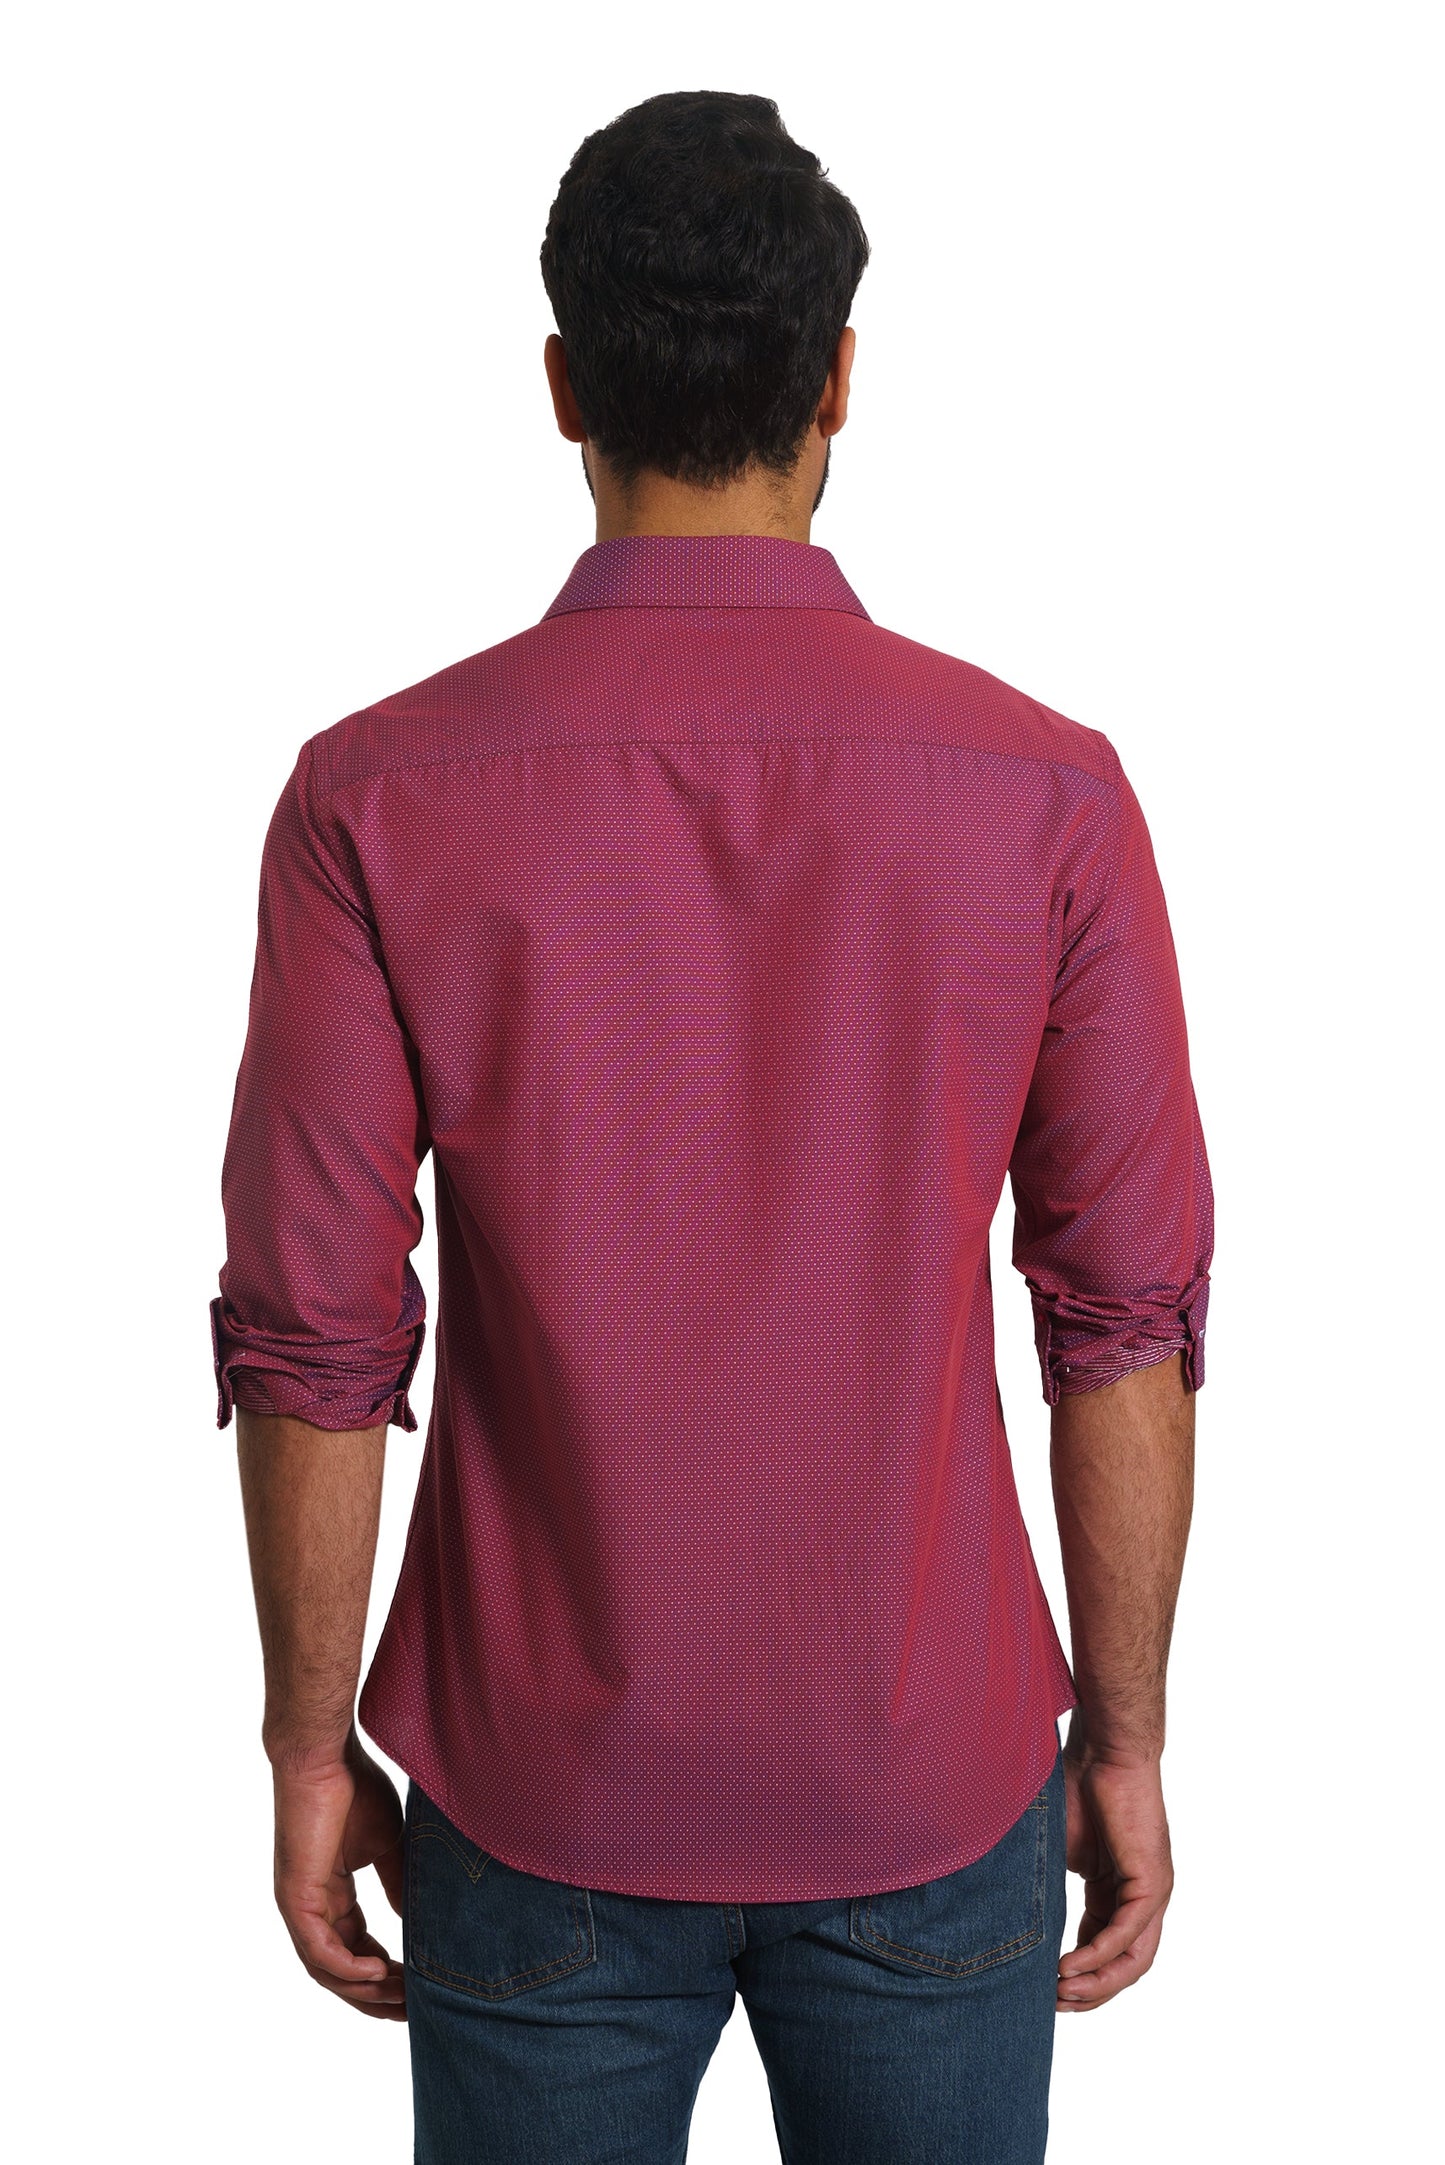 Maroon Long Sleeve Shirt TH-2855 Back